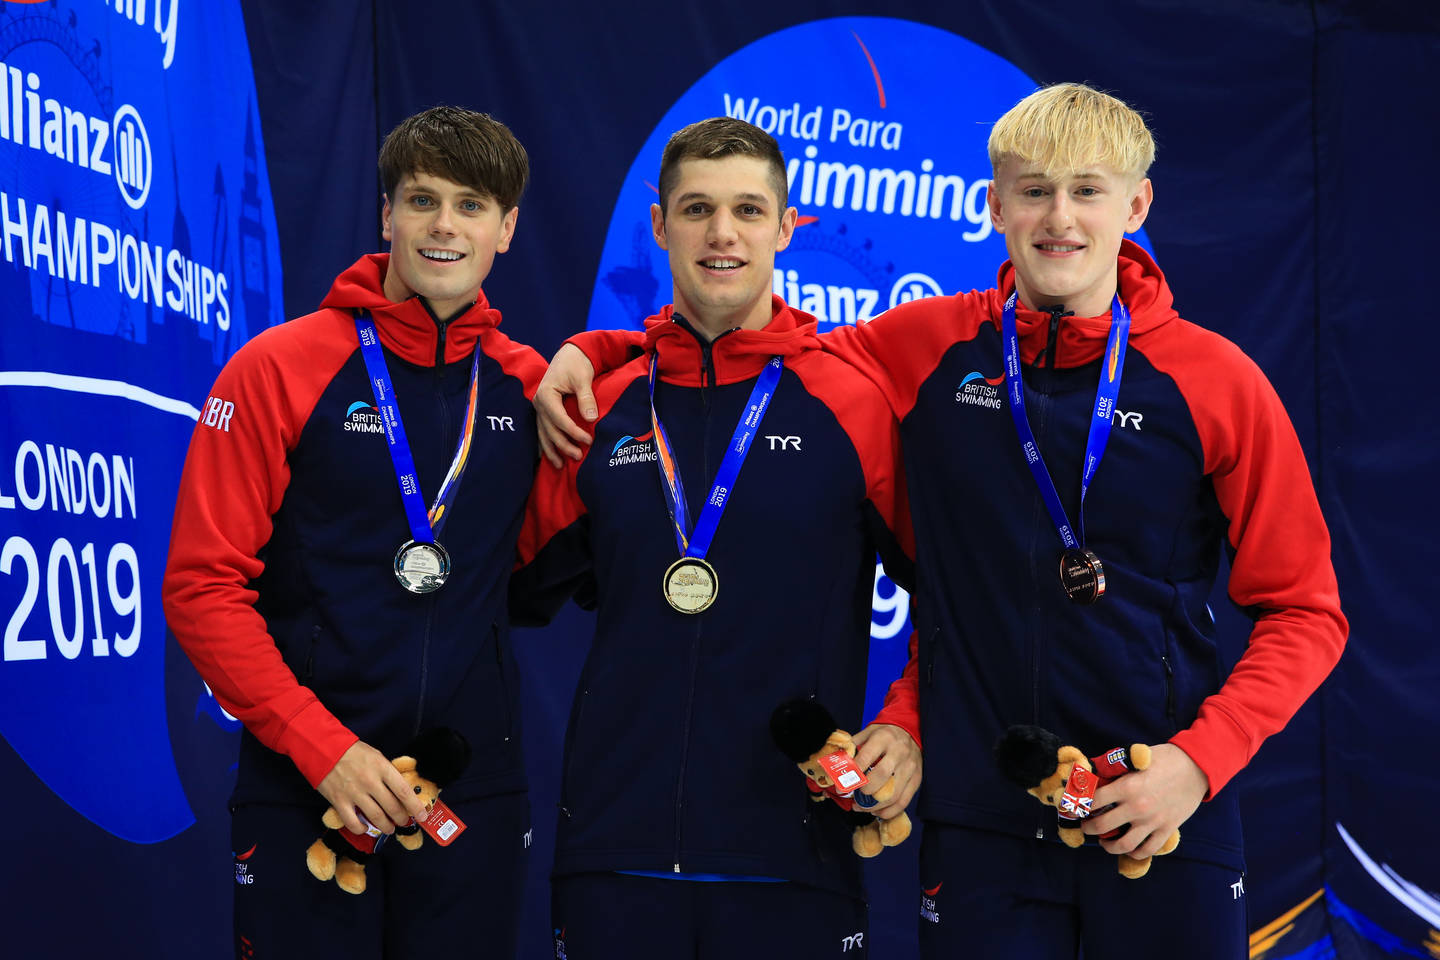 Reece Dunn, Tom Hamer and Jordan Catchpole wear medals on the podium 